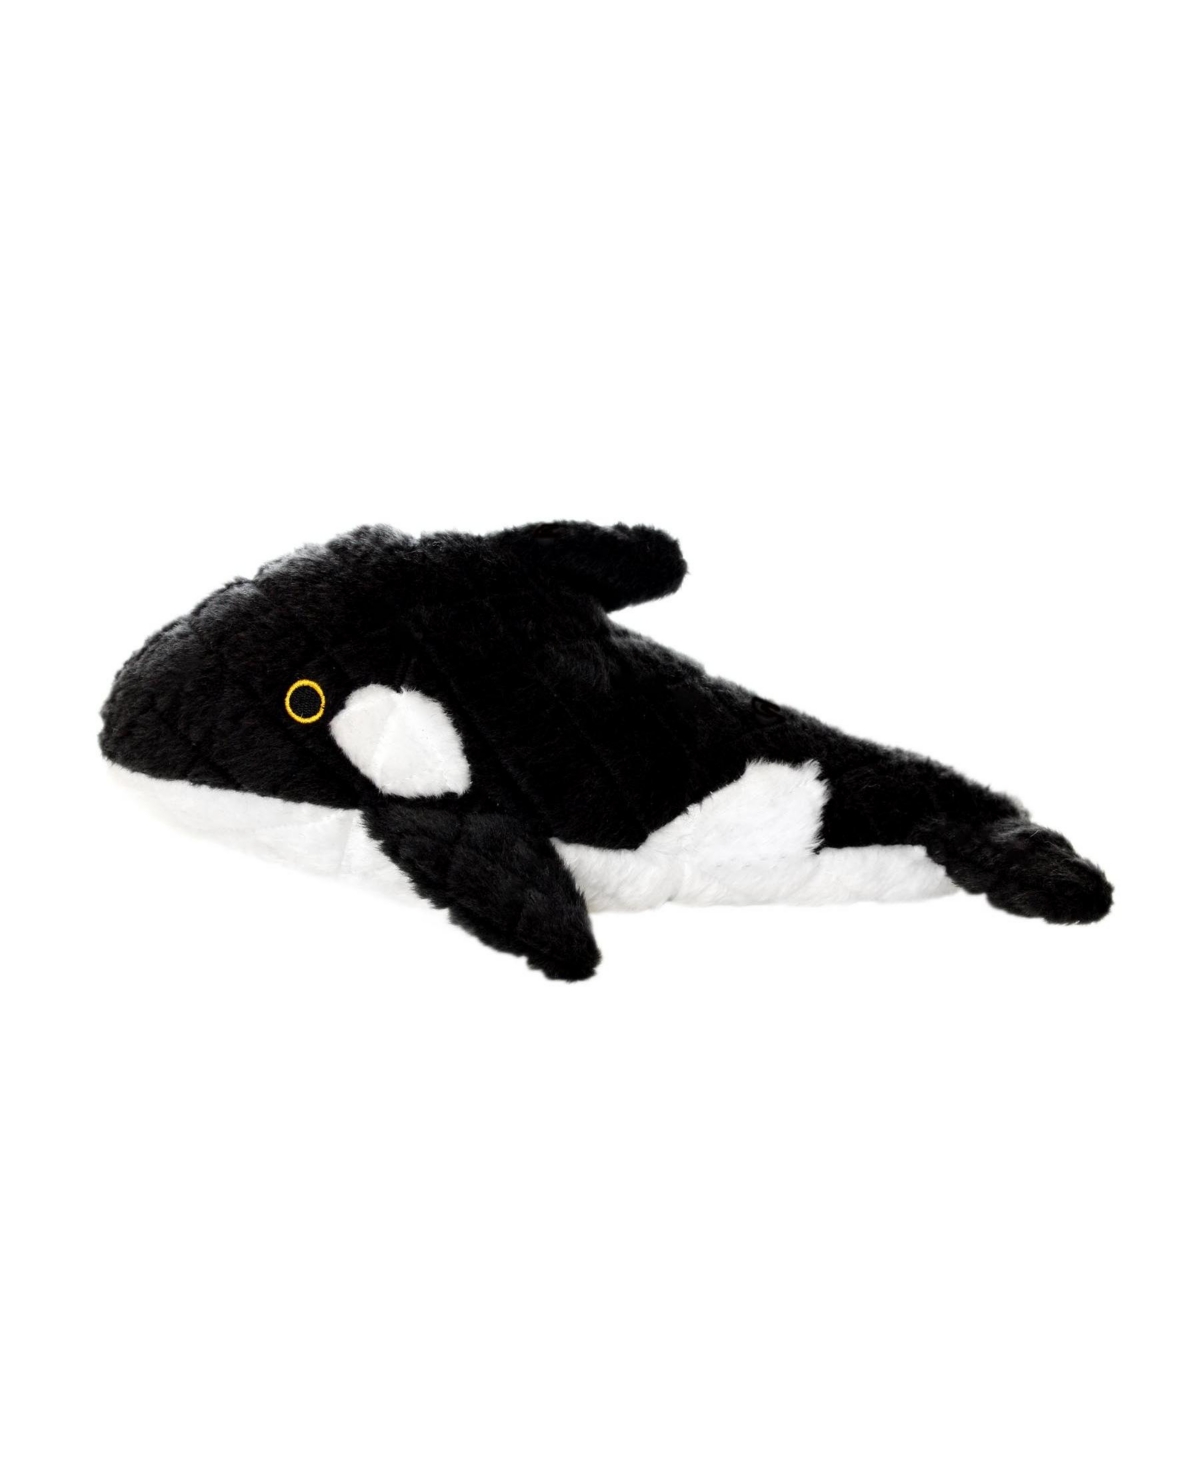 Ocean Whale, Dog Toy - Black